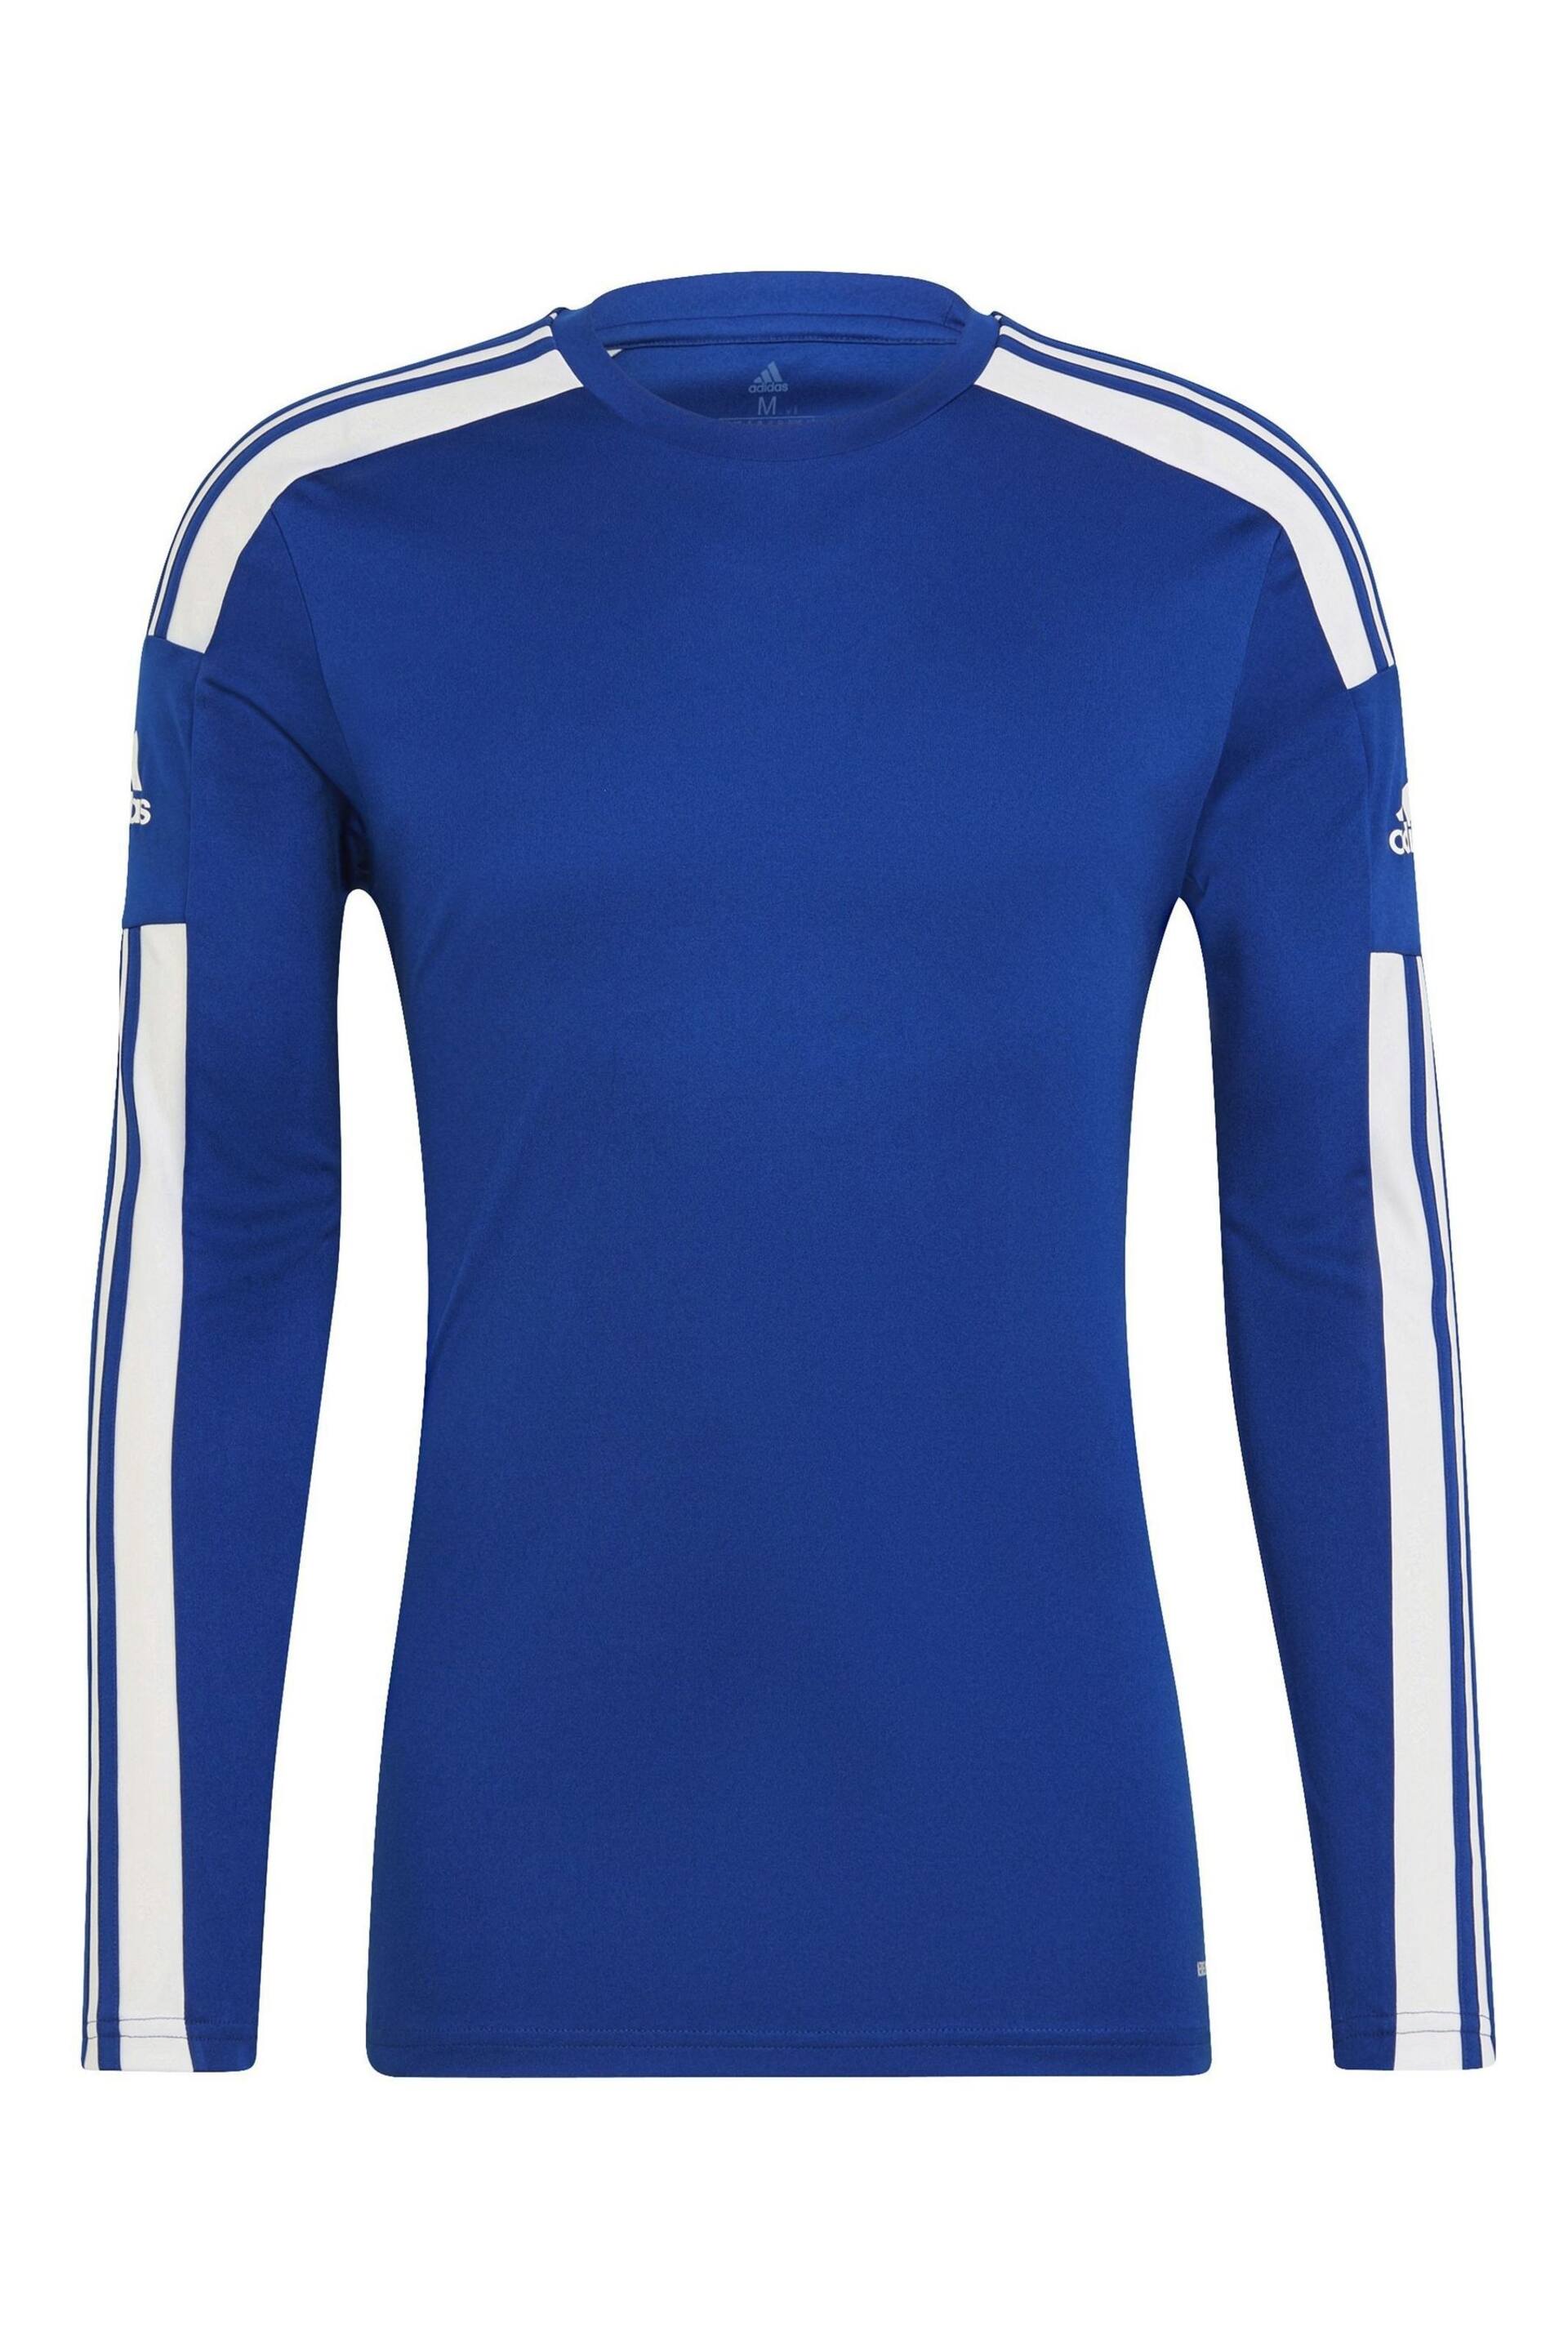 adidas Blue Football Squadra Long Sleeve T-Shirt - Image 6 of 7